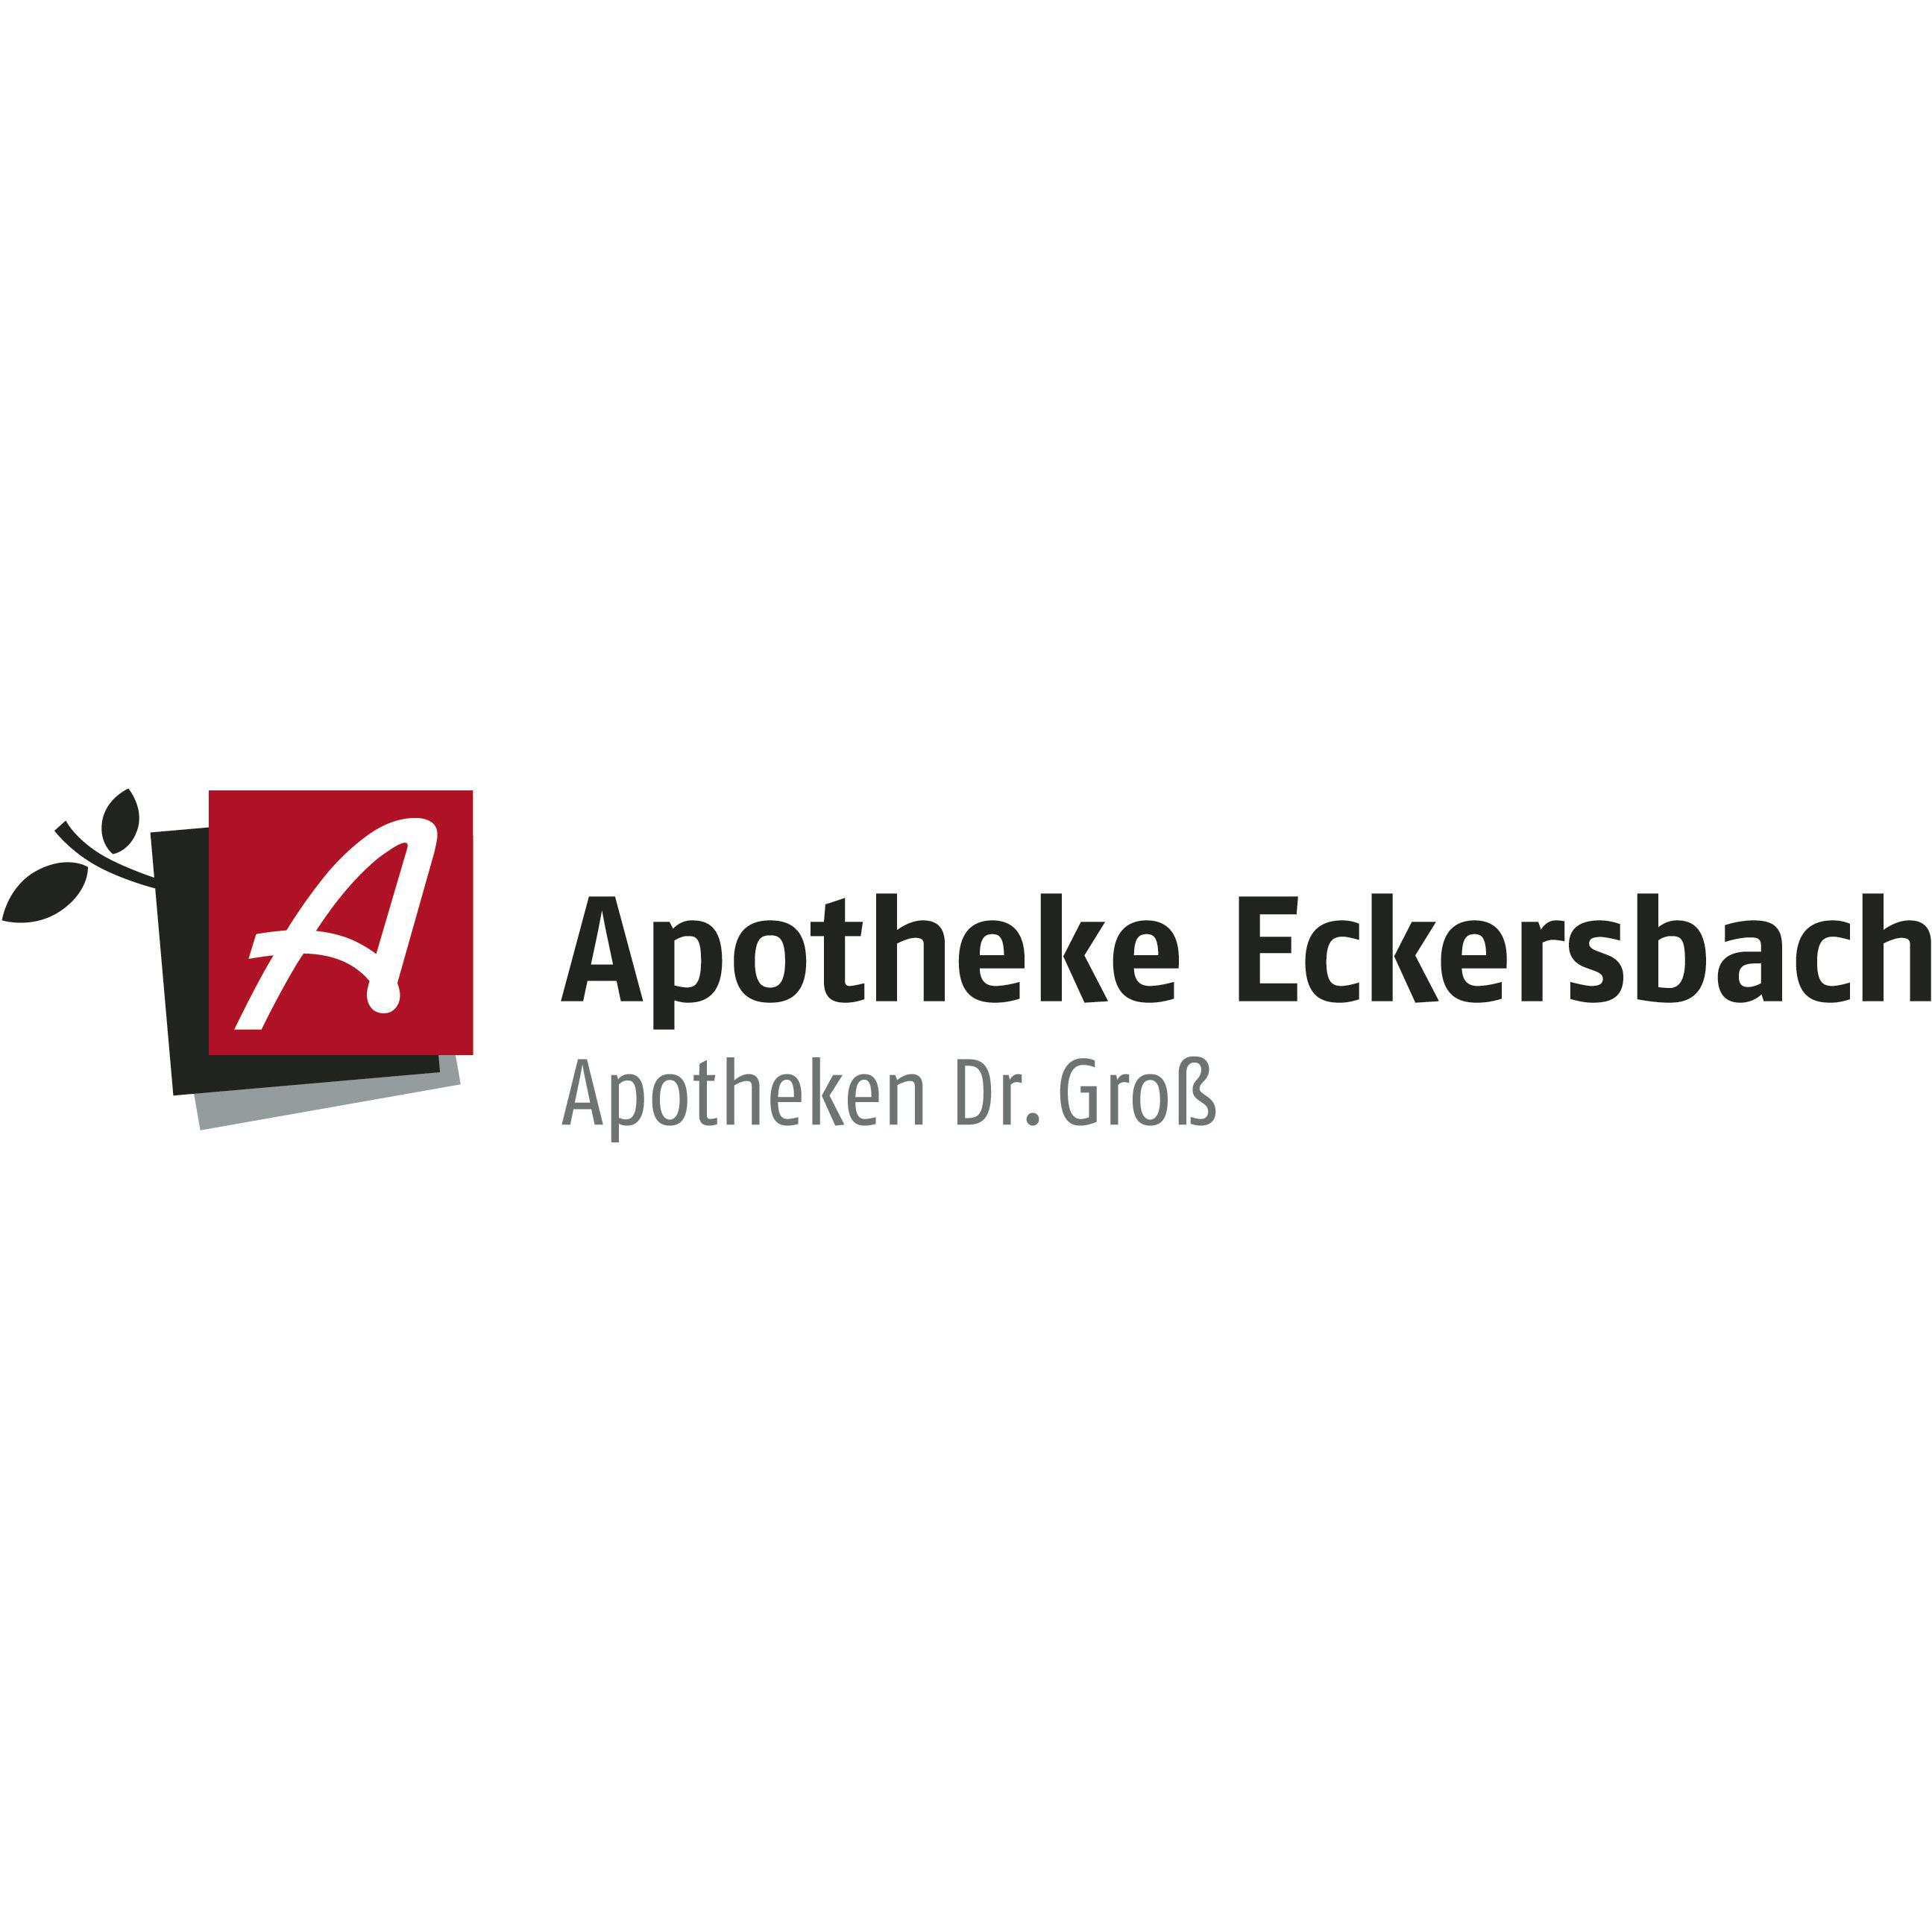 Apotheke Eckersbach in Zwickau - Logo